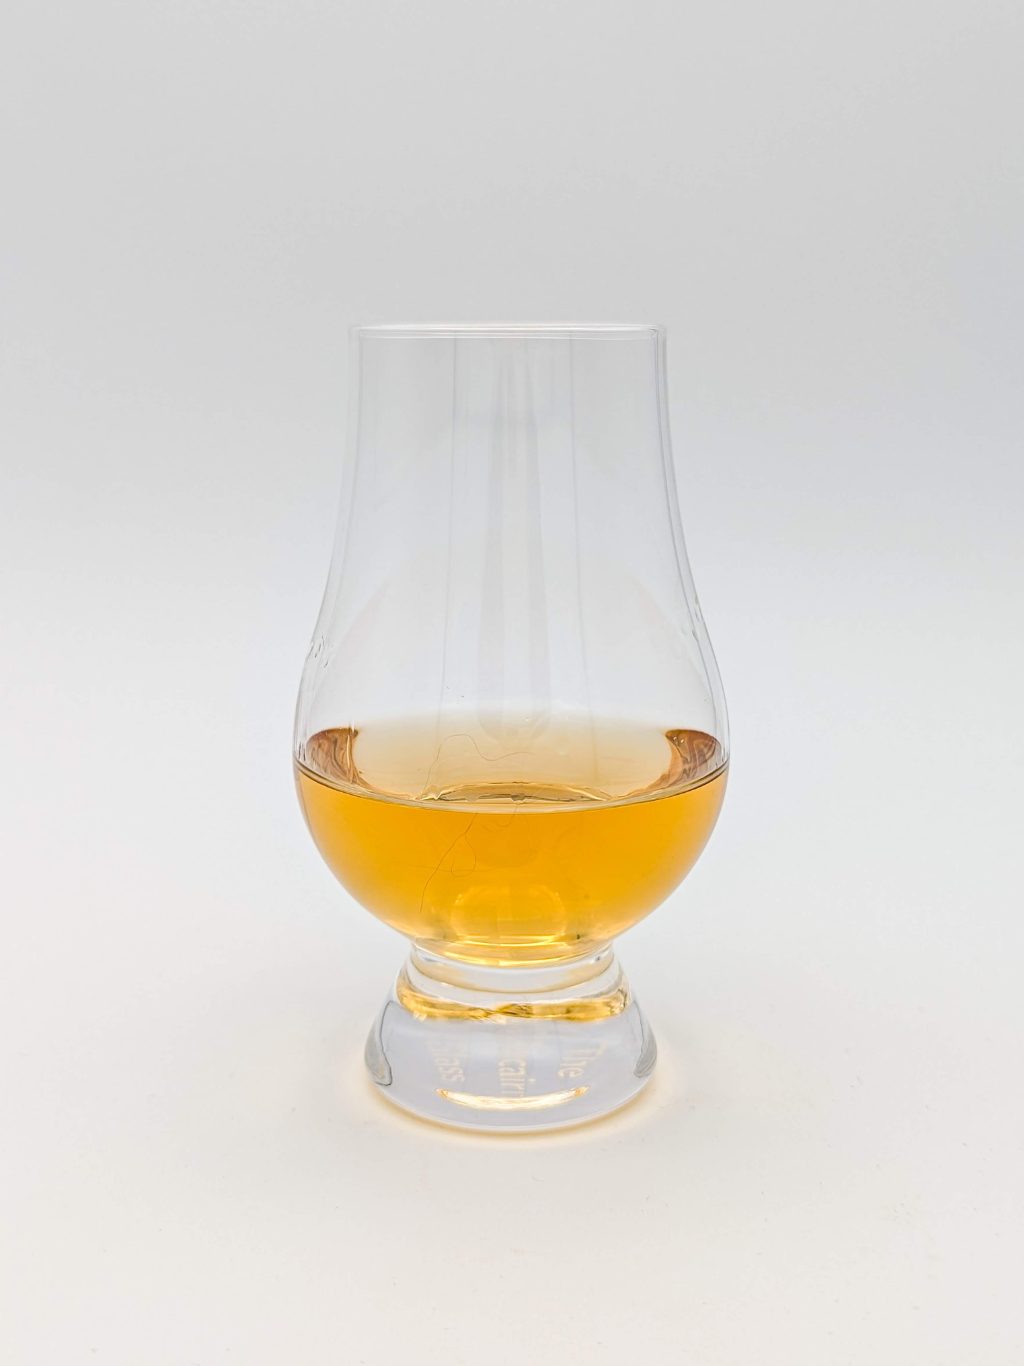 gold liquid in a glencairn glass